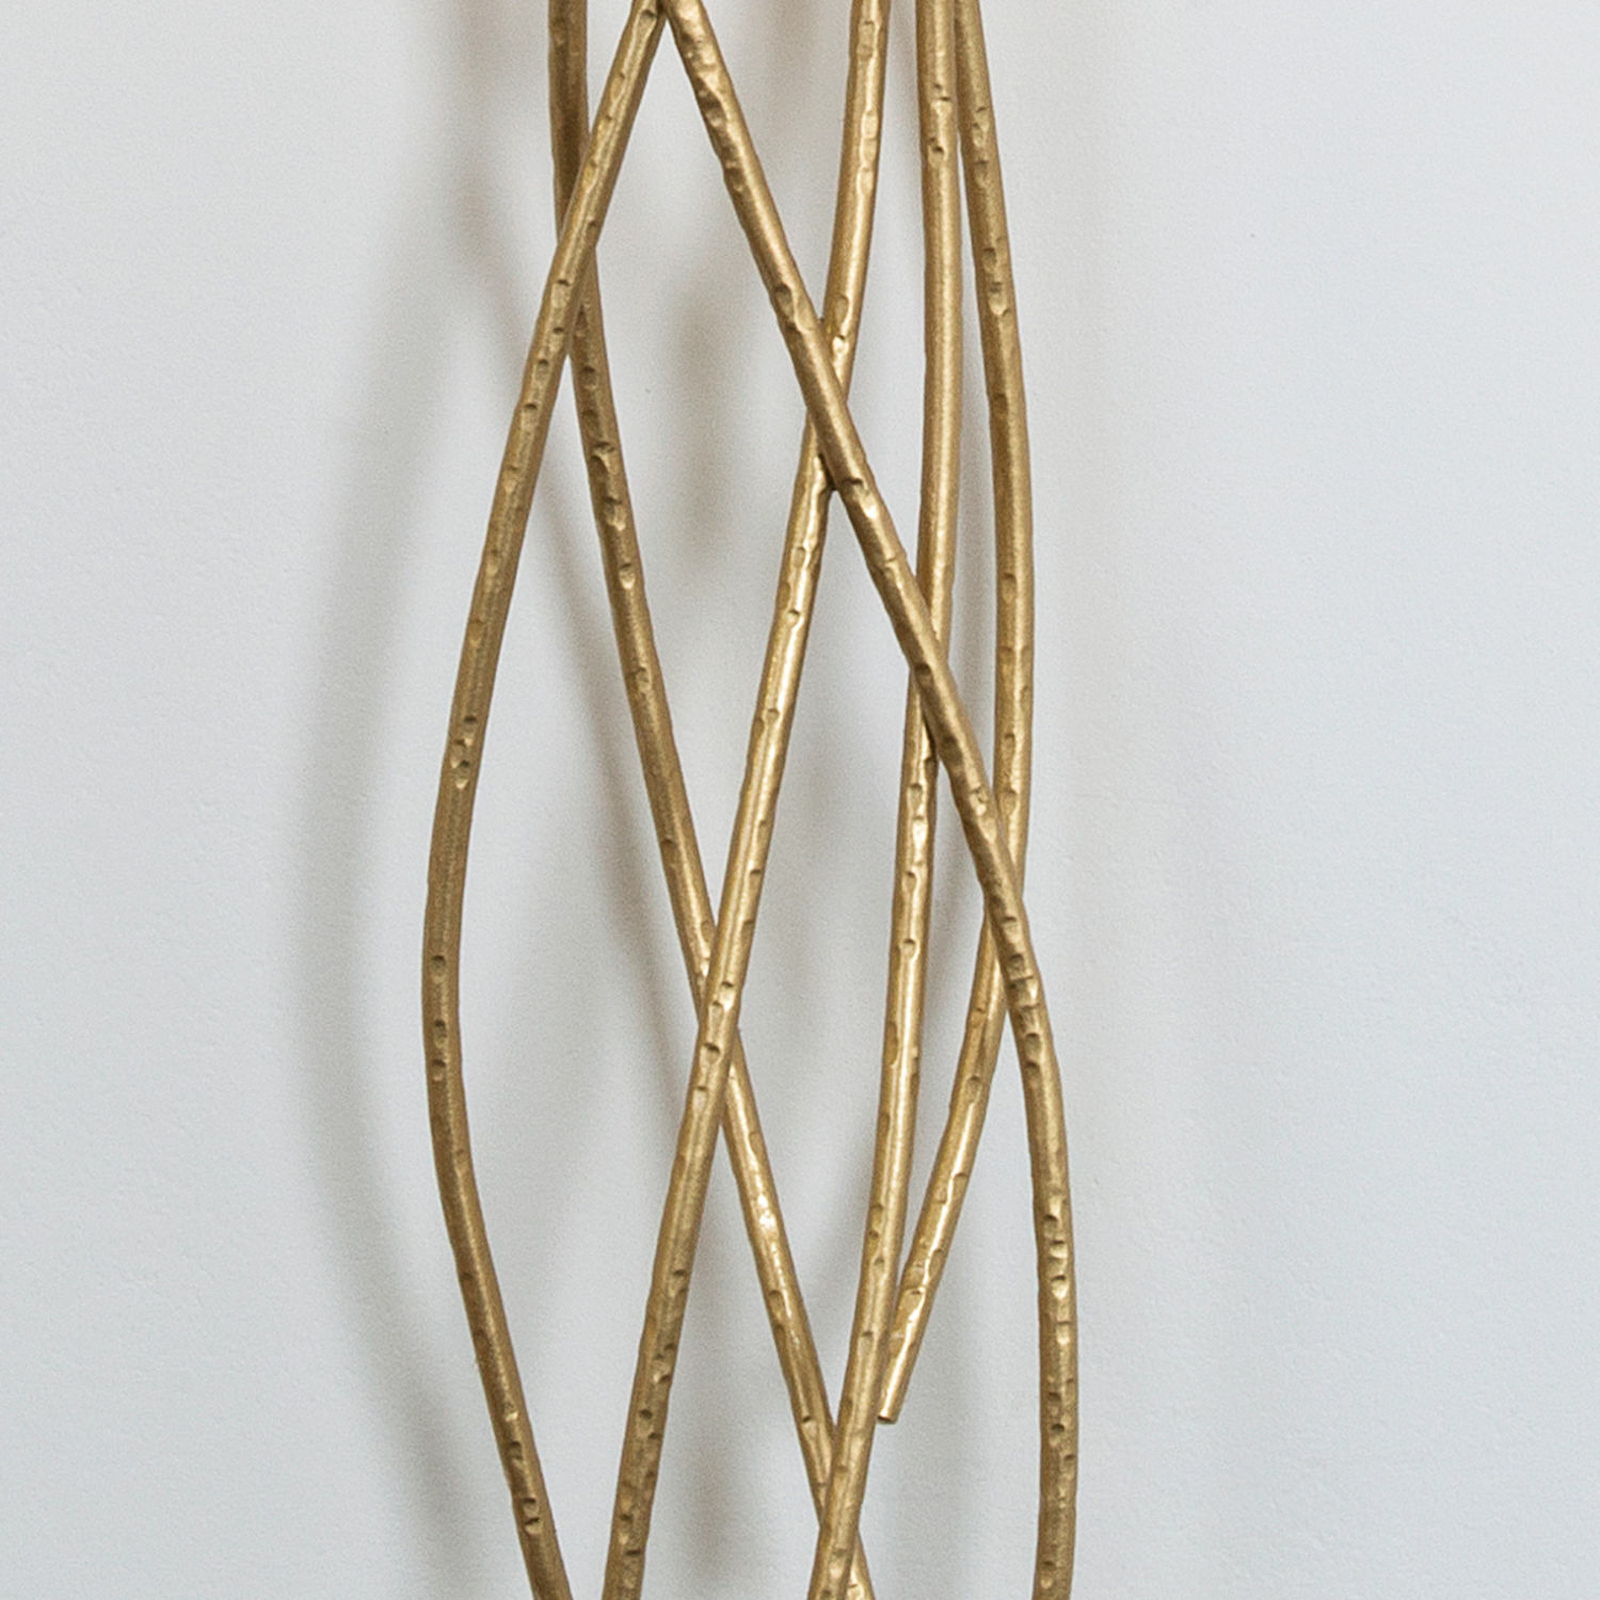 Elba lungo vägglampa, guld/svart, höjd 144 cm, järn